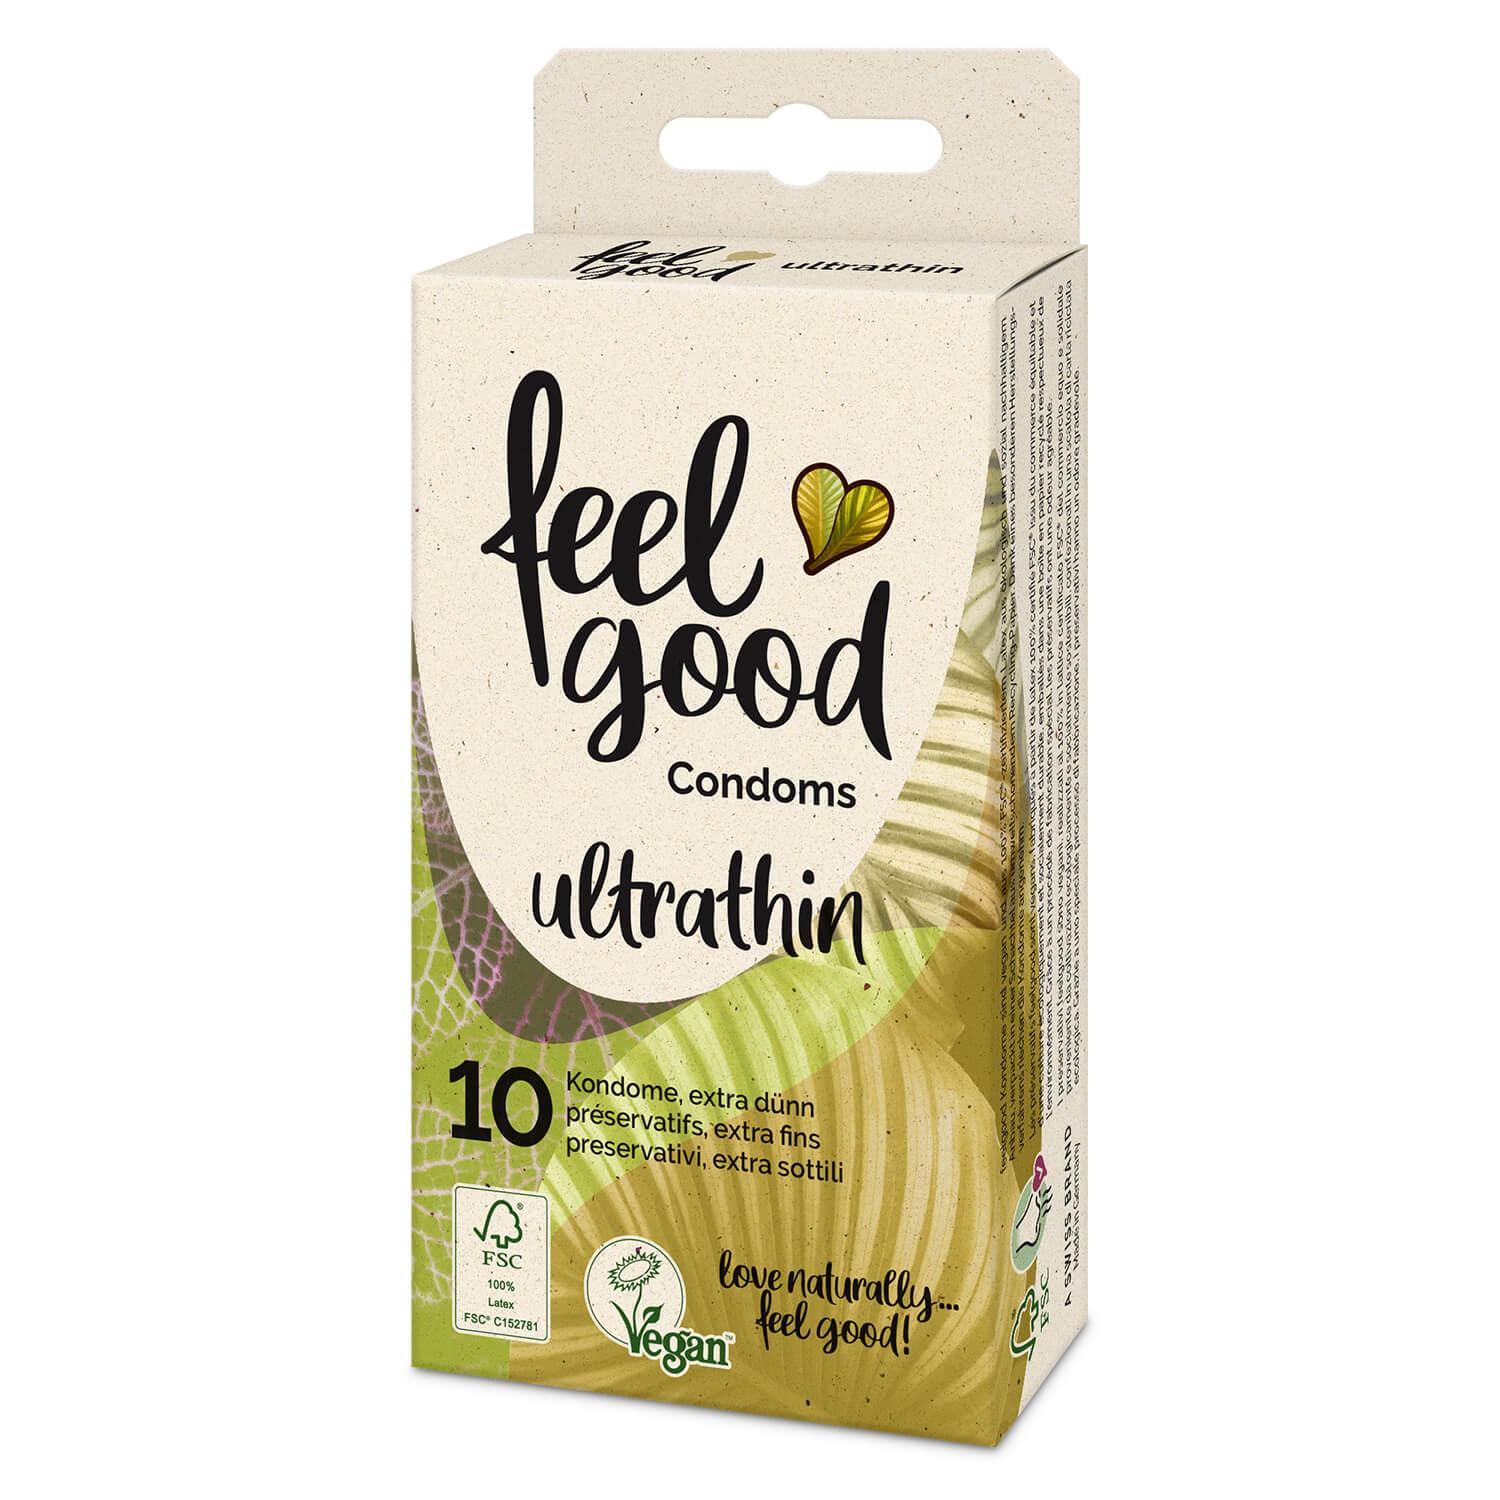 feelgood condoms - Condoms ultrathin